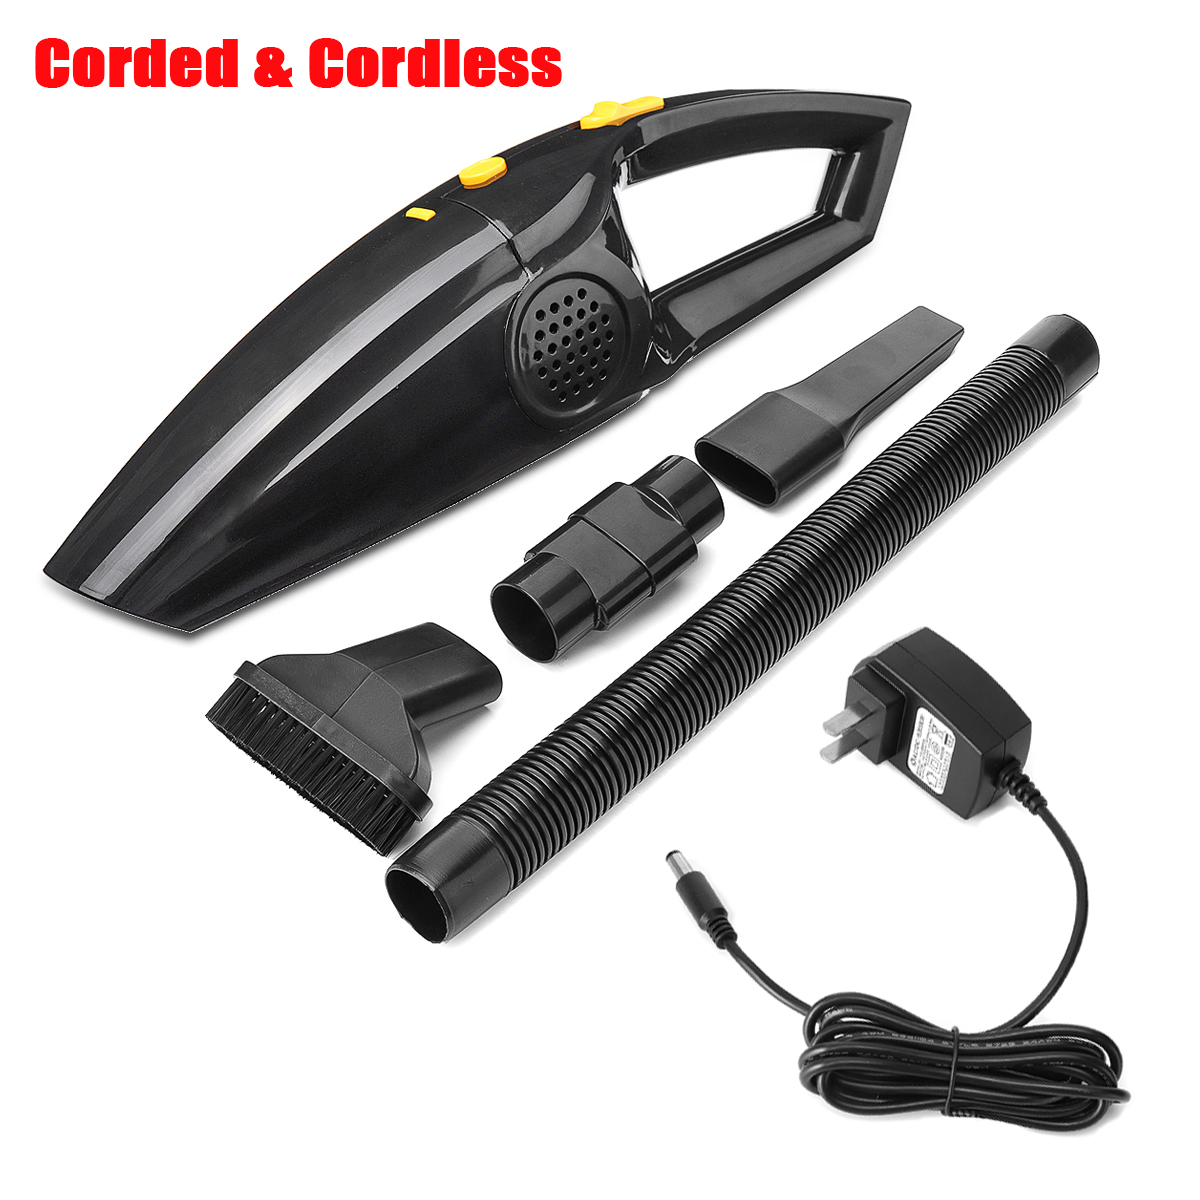 Portable-Vacuum-Cleaner-12V-Cordless-Portable-Handheld-Wet-Dry-Dust-Cleaner-1359349-1